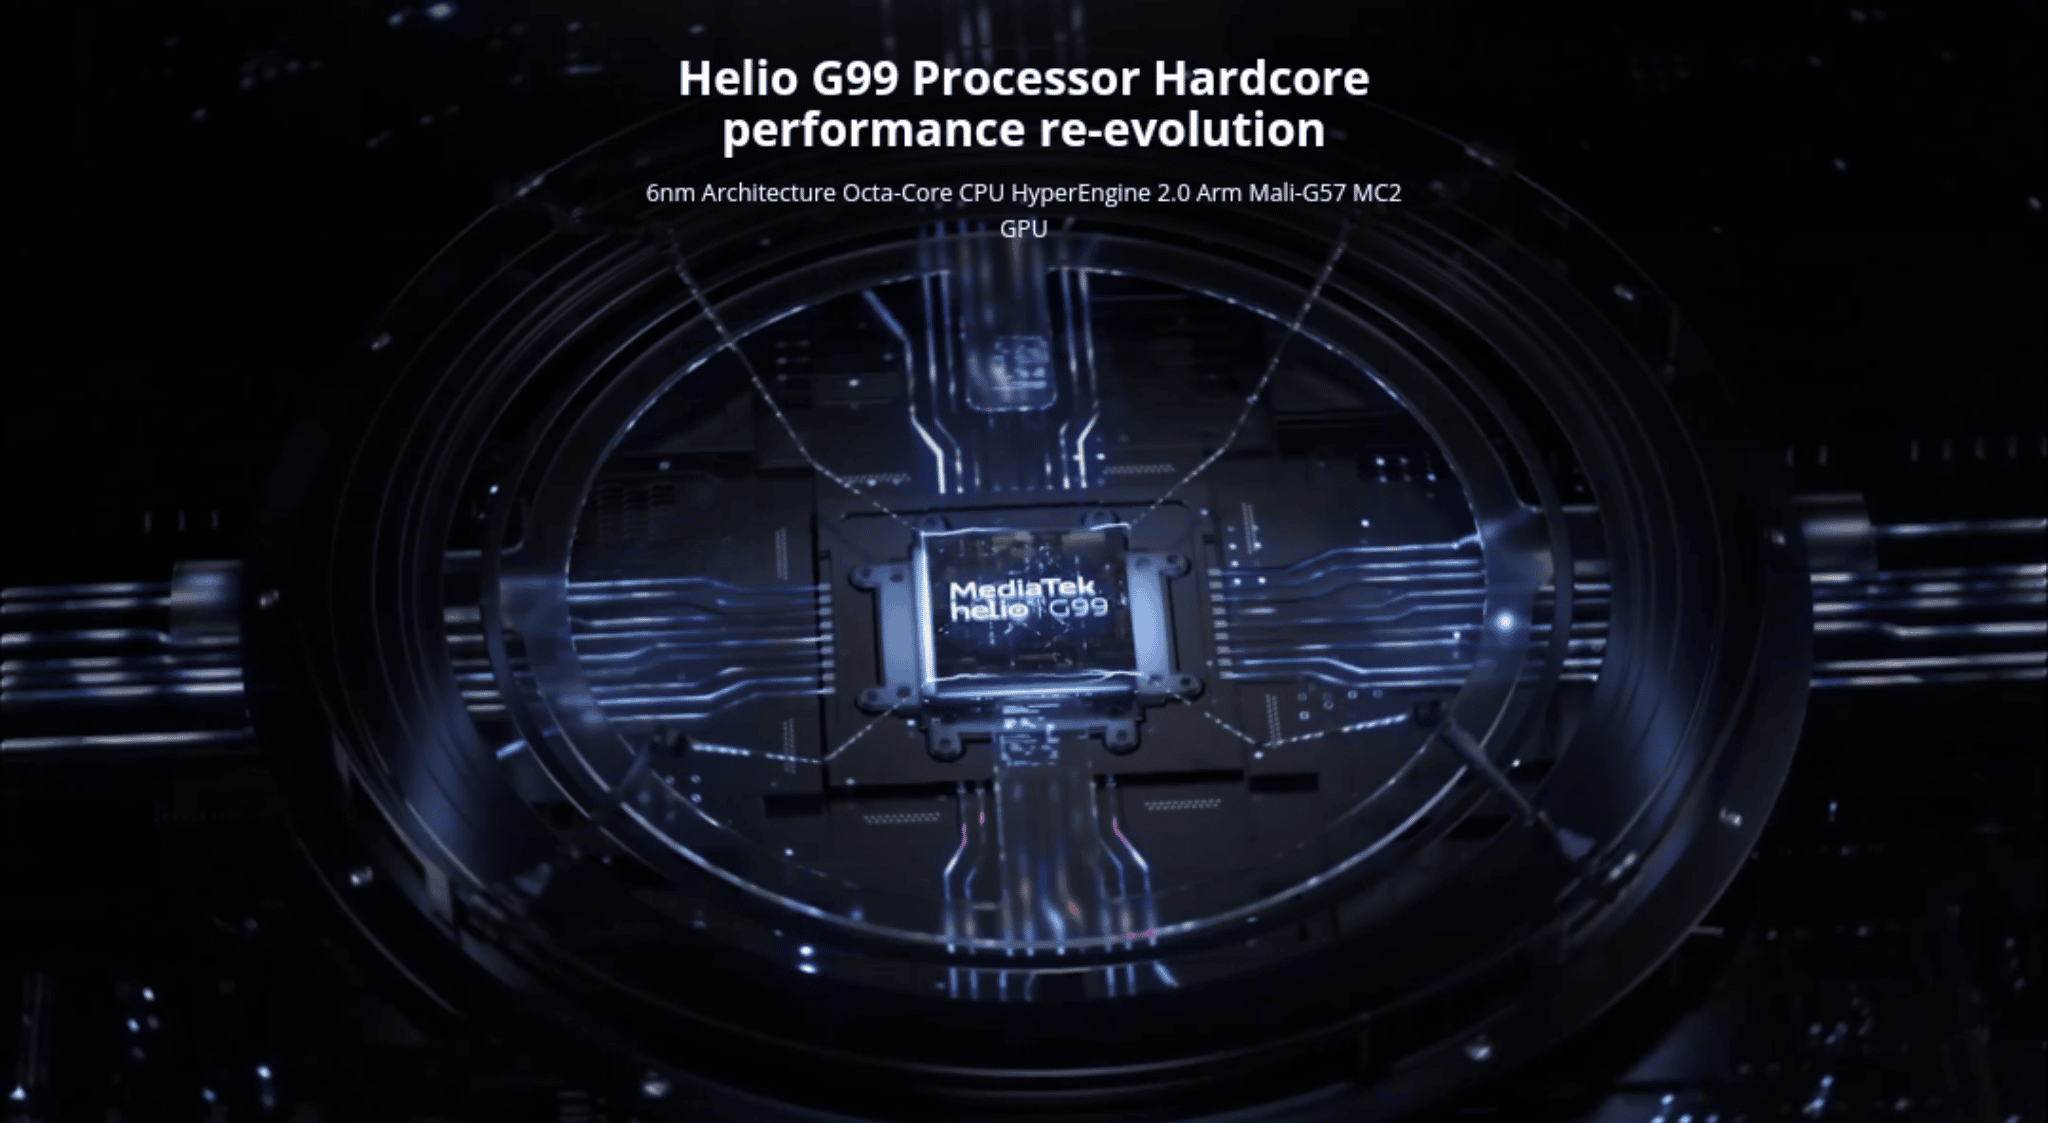 MediaTek Helio G99 Processor